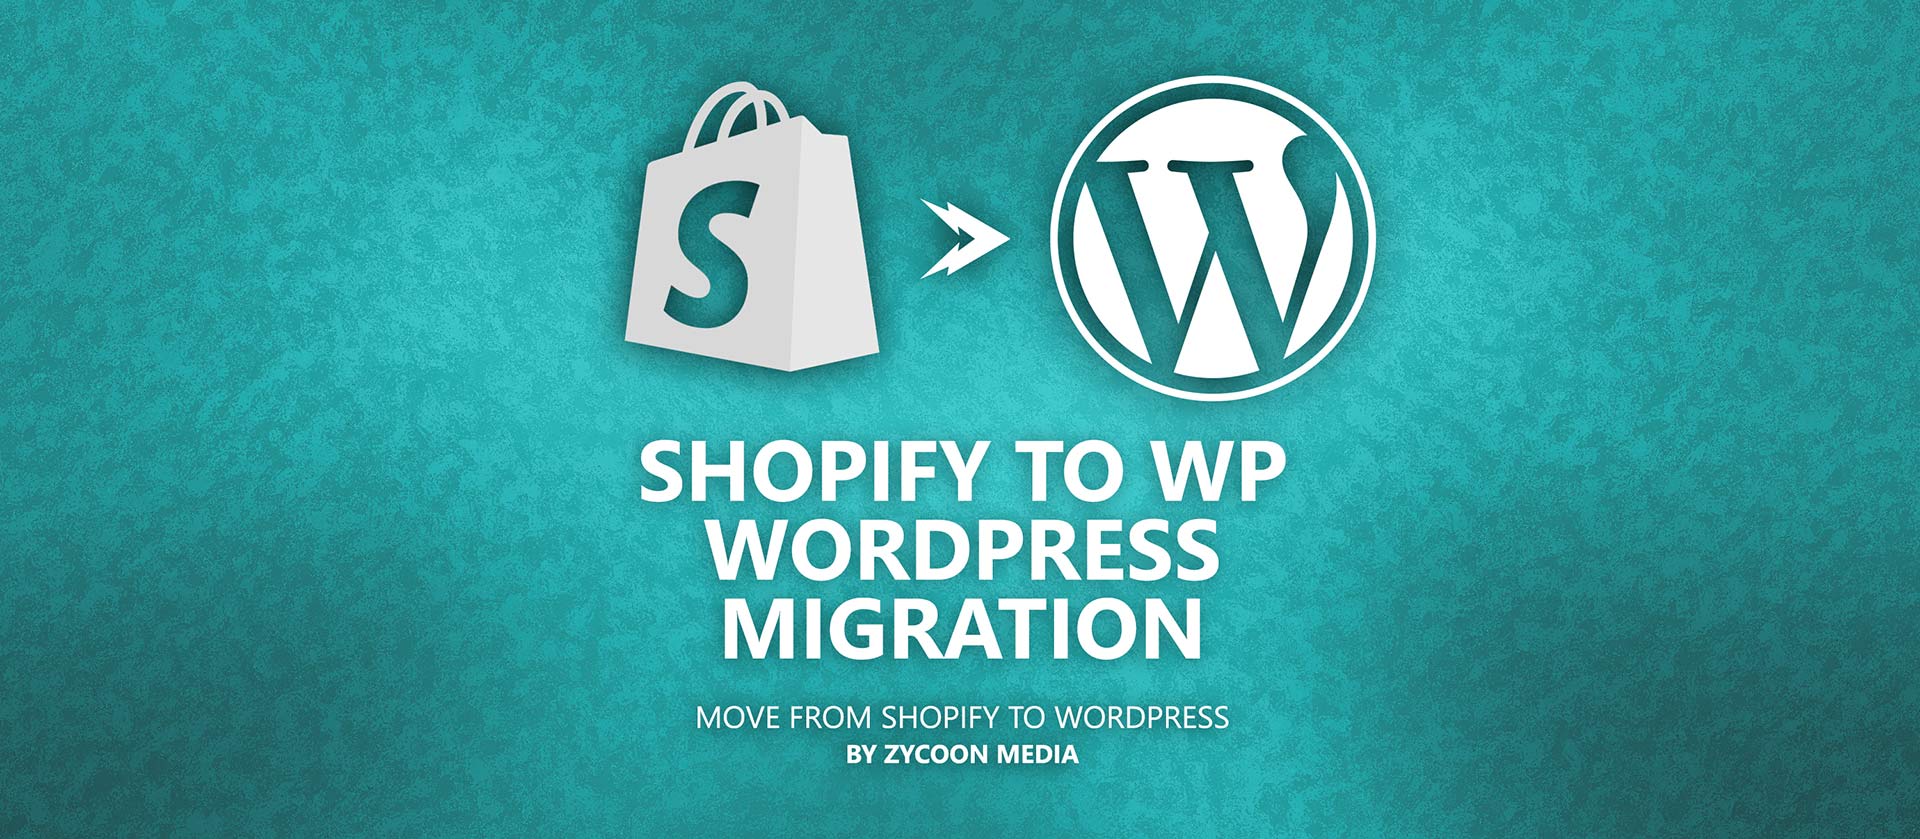 Shopify Wordpress Migration